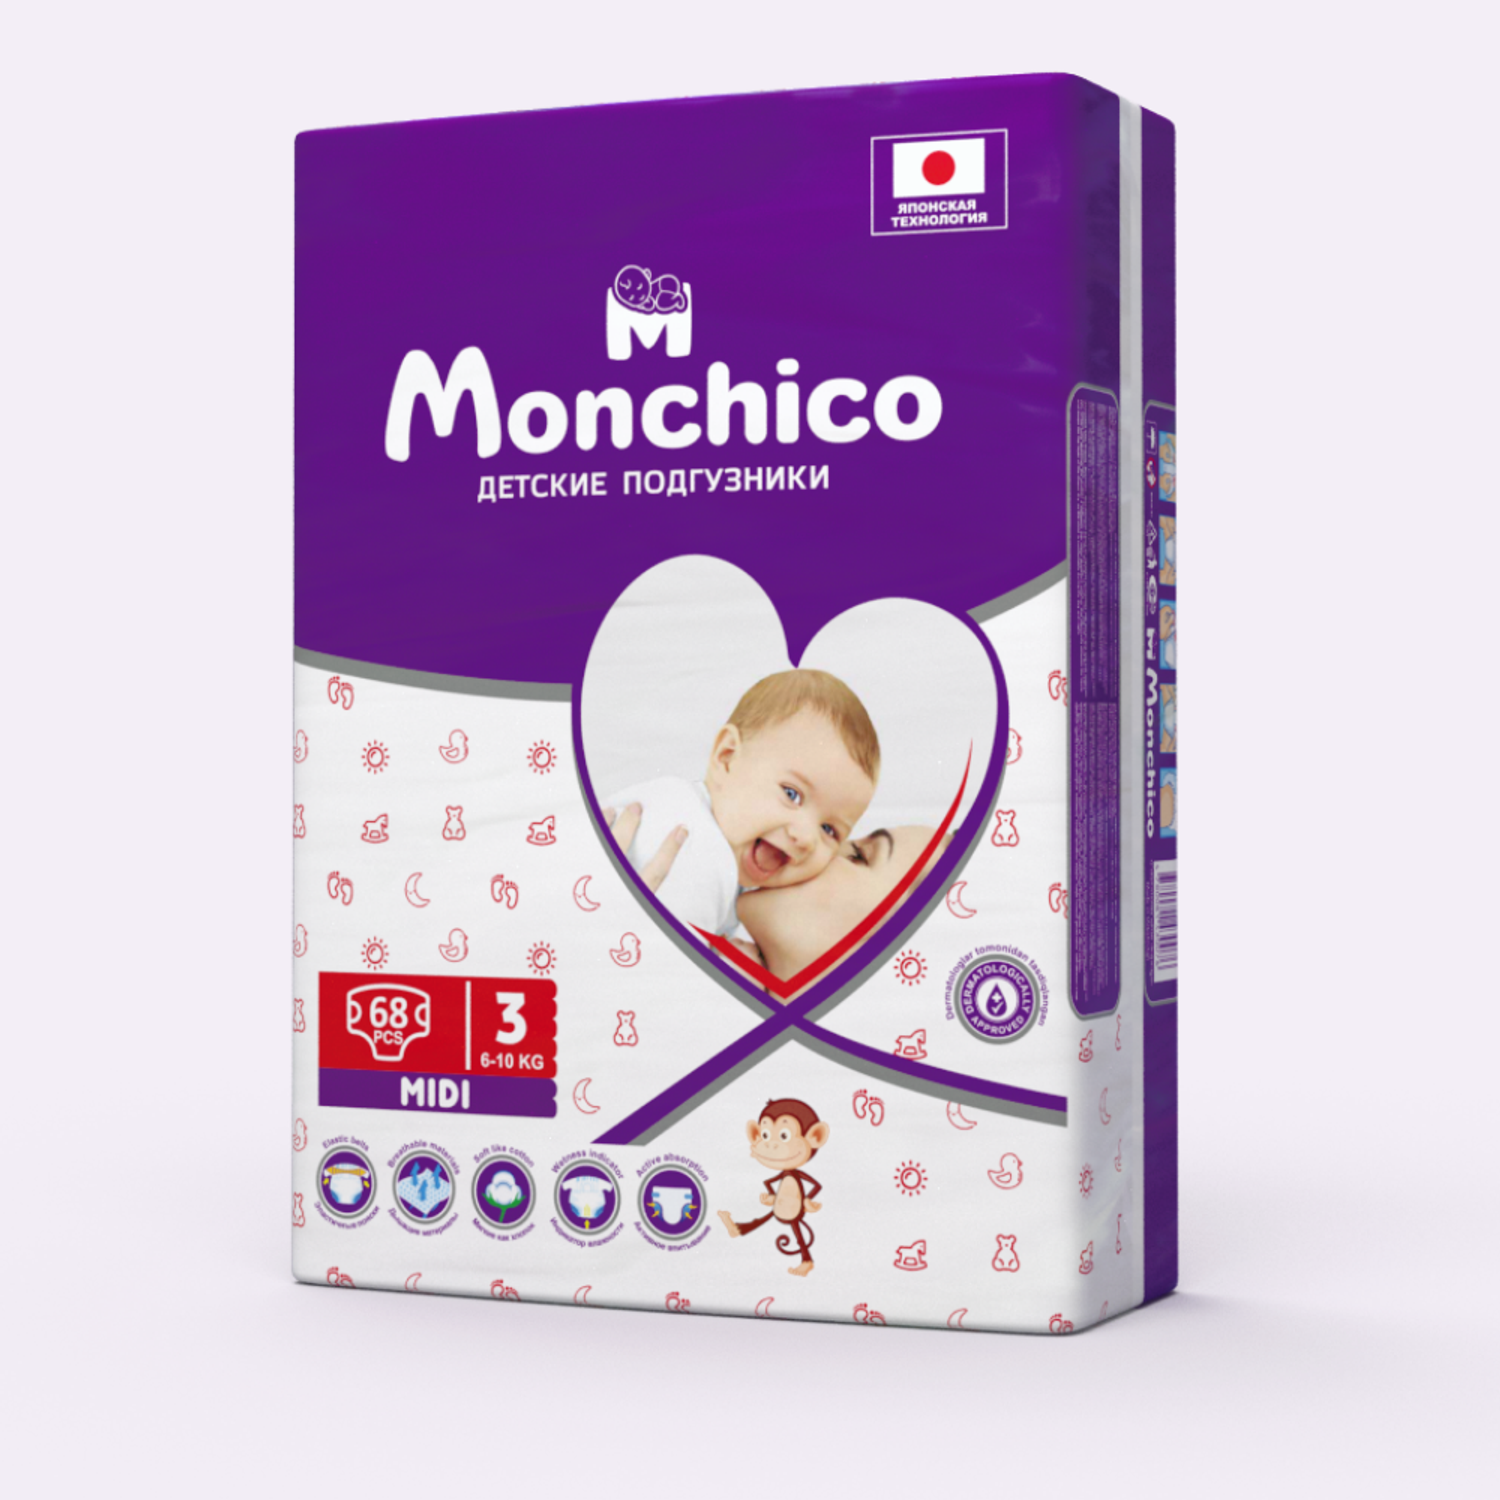 Детские подгузники Monchico MIDI 6-10 кг 68 штук - фото 1